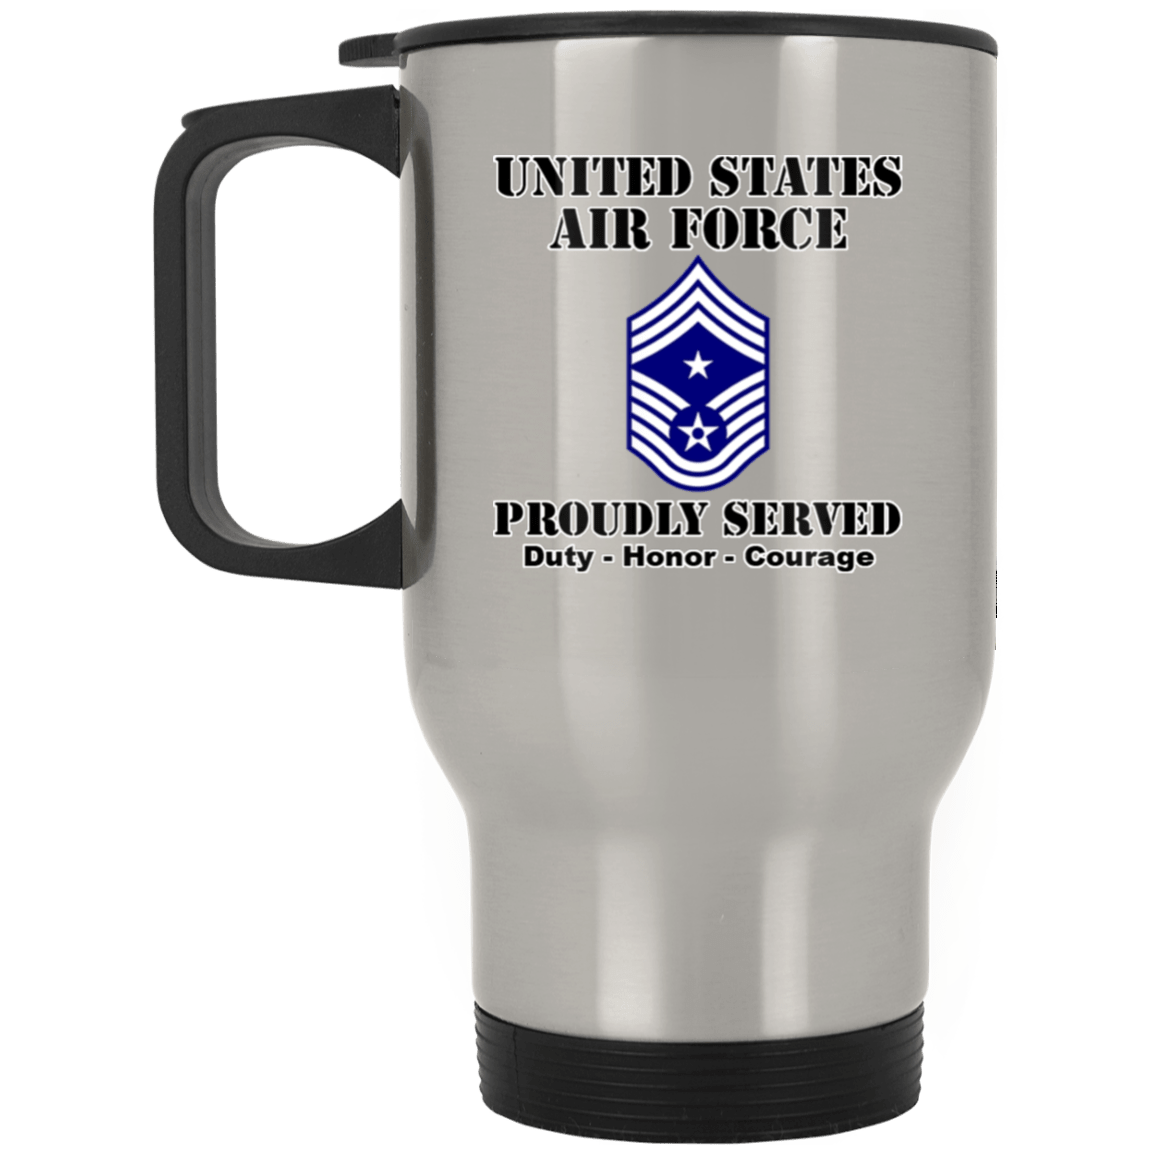 US Air Force E-9 Command Chief Master Sergeant CCM E9 Noncommissioned Officer Ranks White Coffee Mug - Stainless Travel Mug-Mug-USAF-Ranks-Veterans Nation